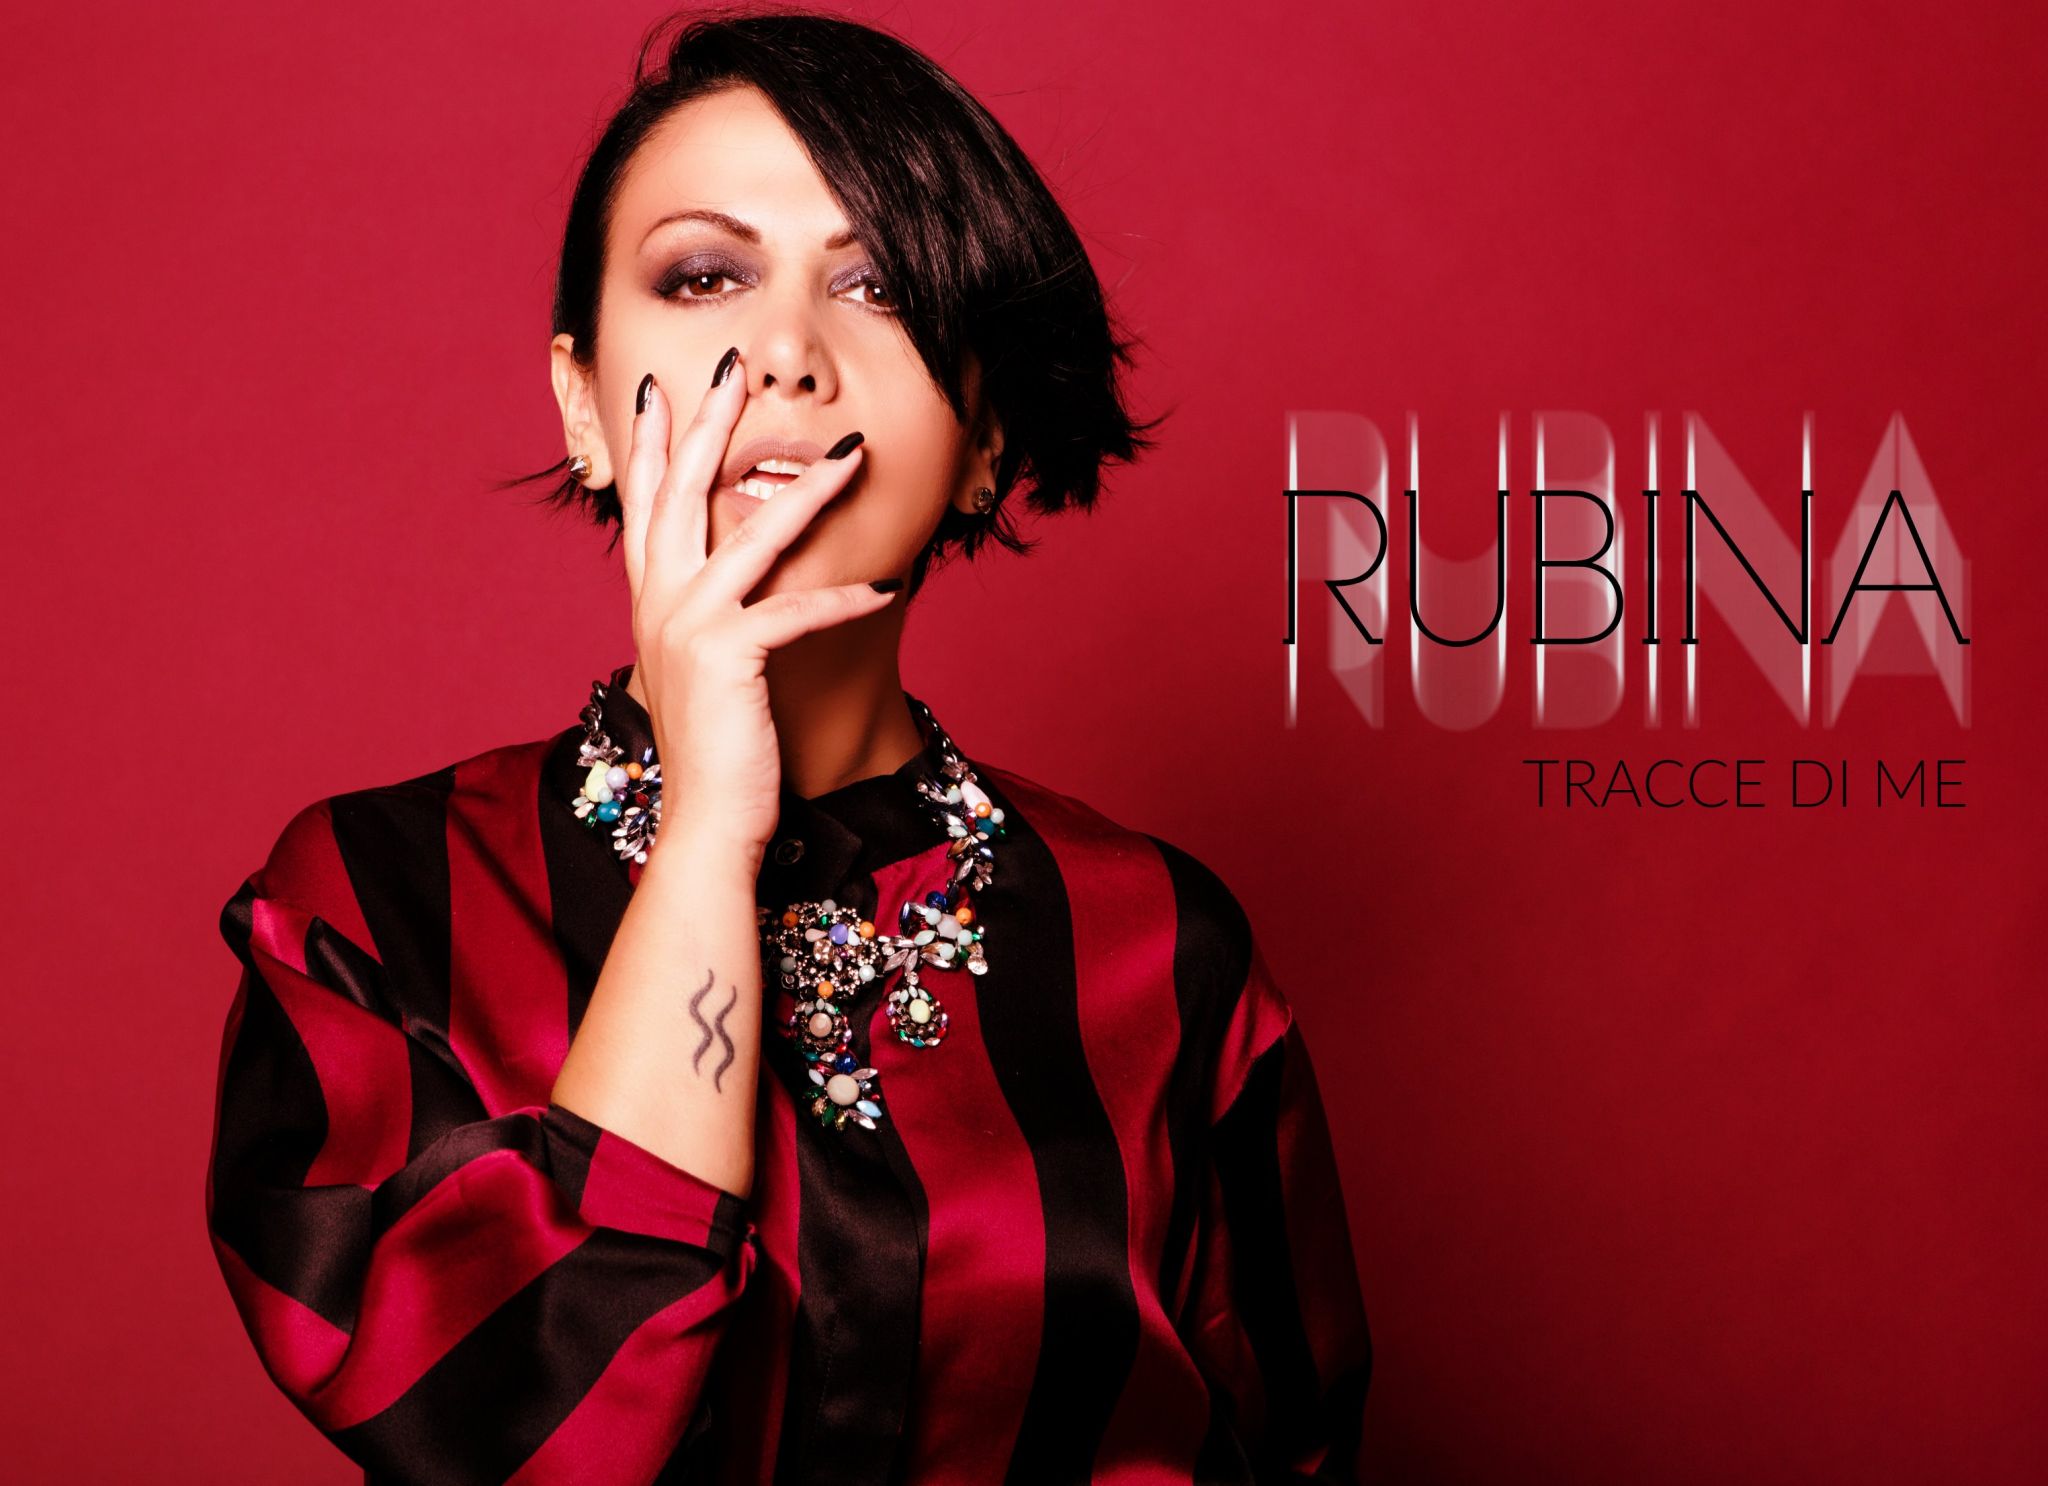 Tracce di me: la ‘rivincita’ pop dance di Rubina